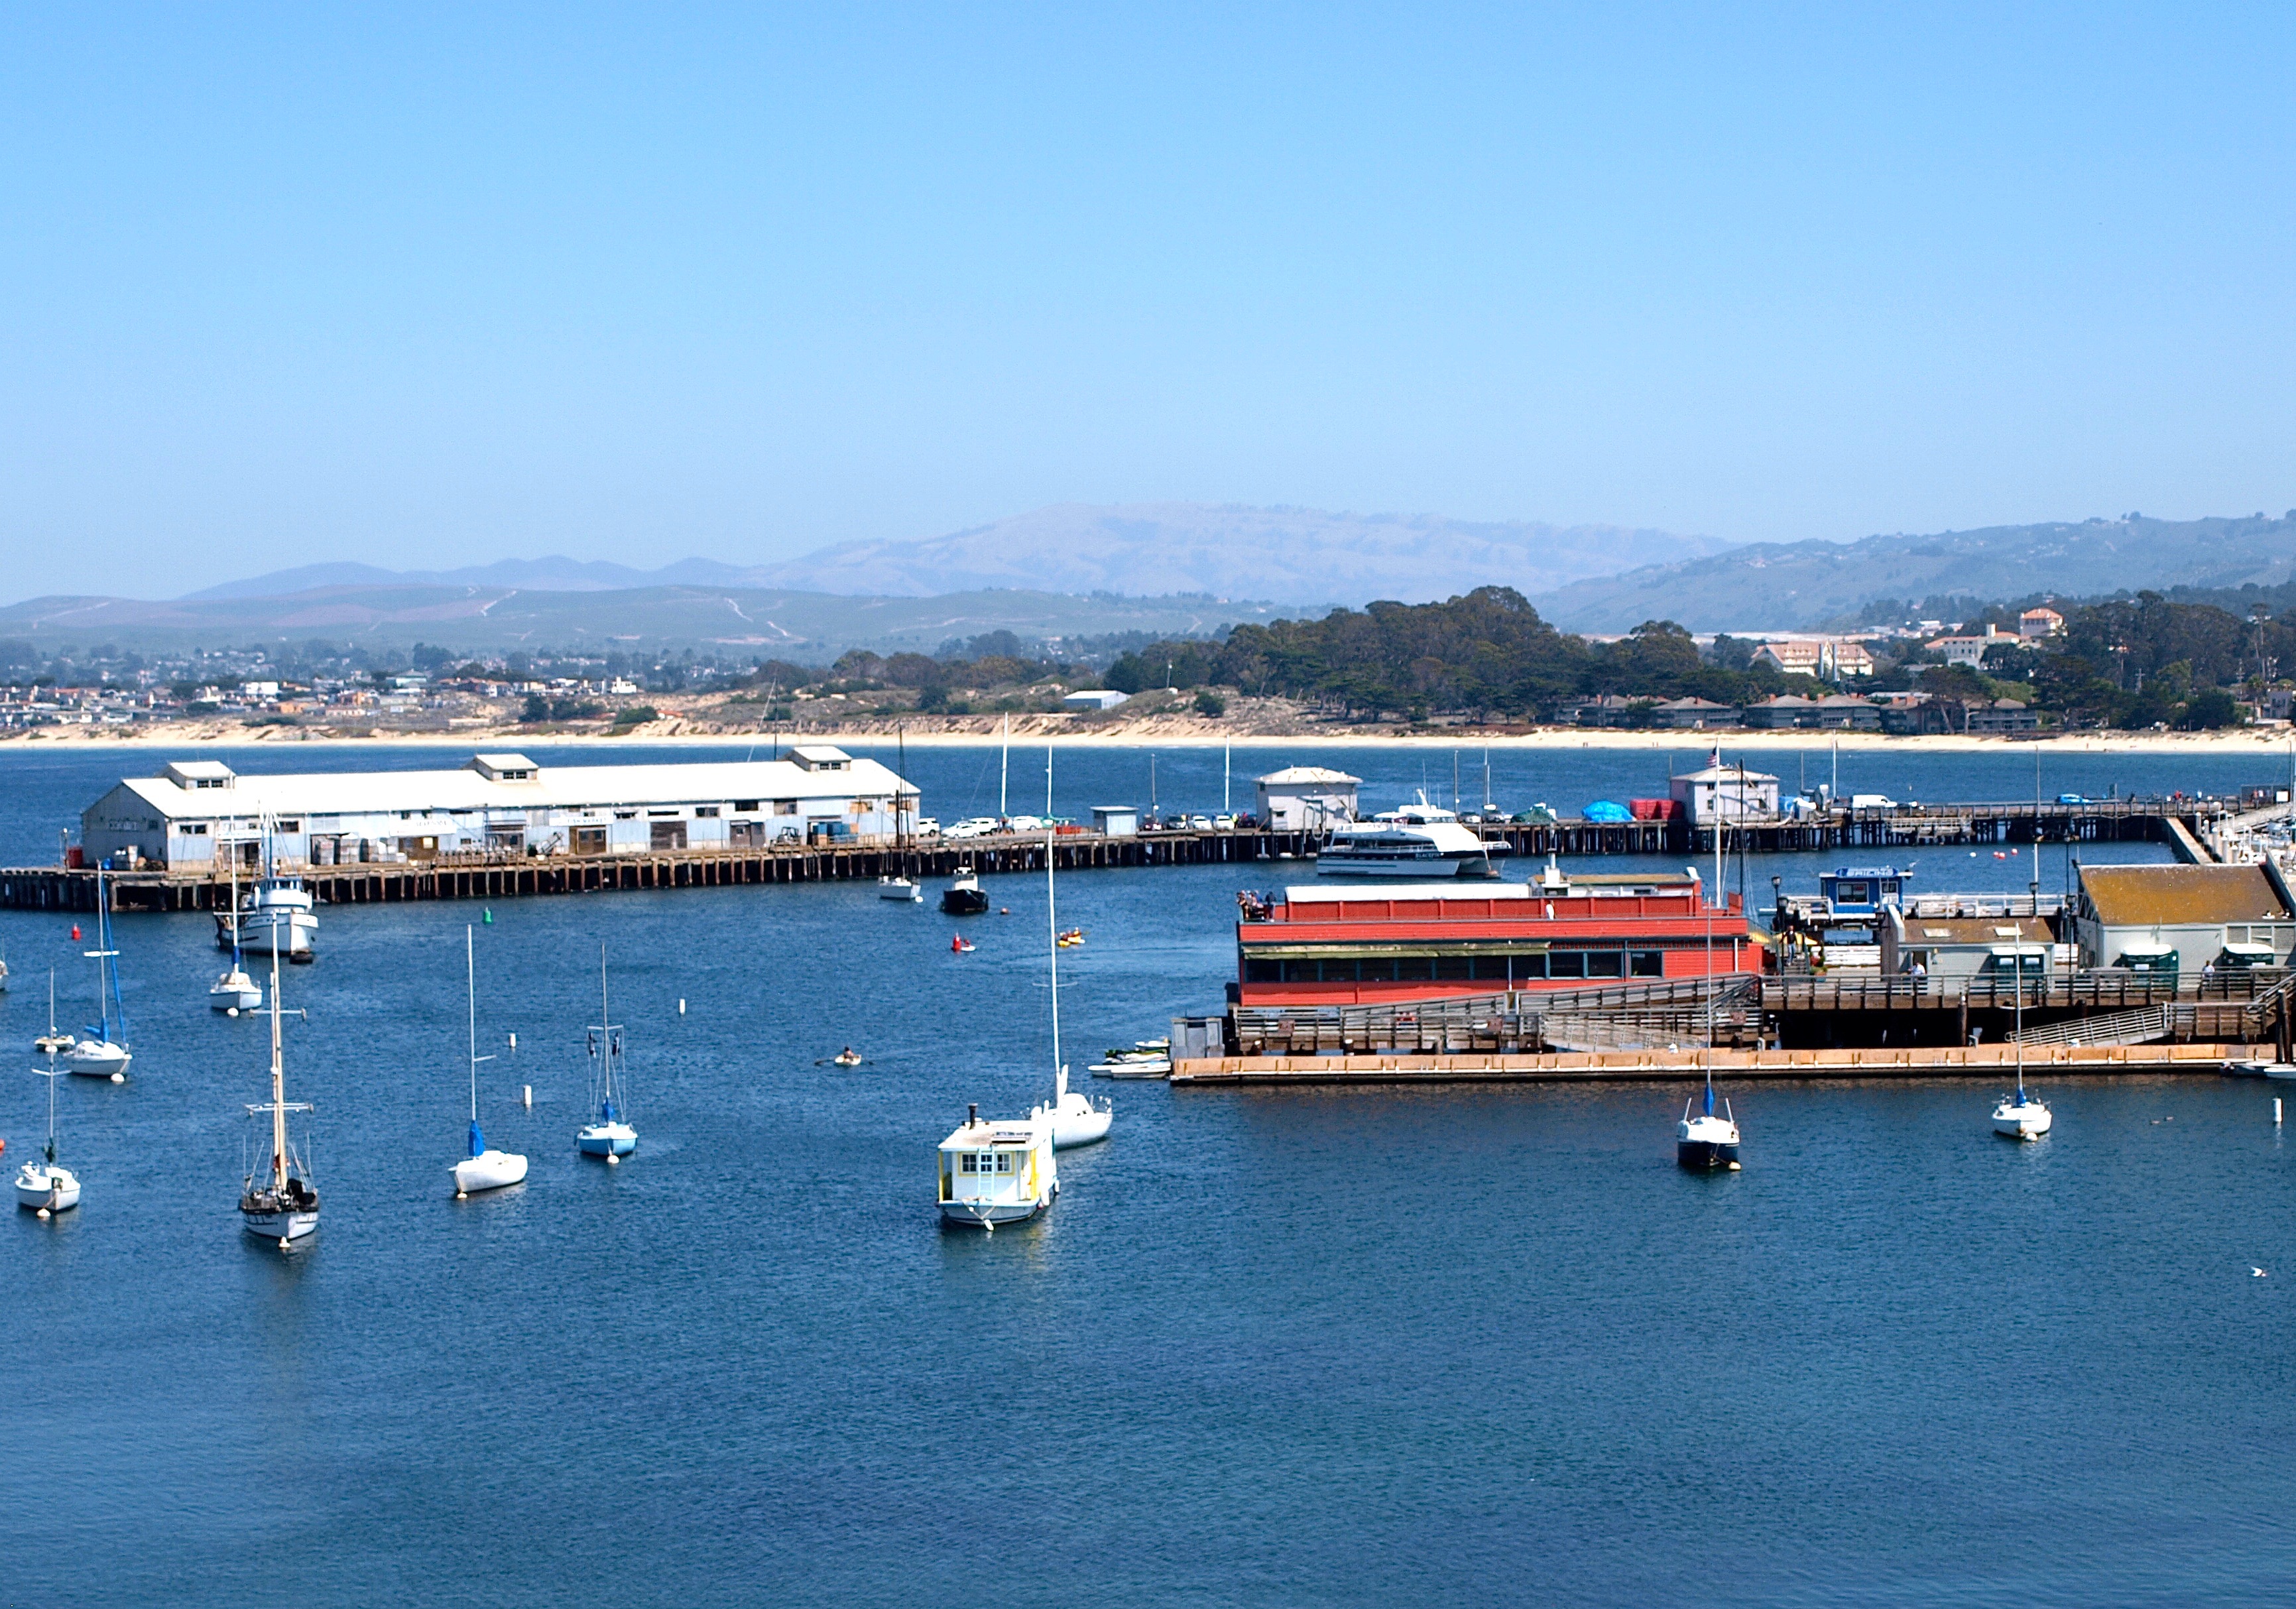 Monterey Municipal Wharf #2 - Pier Fishing in California